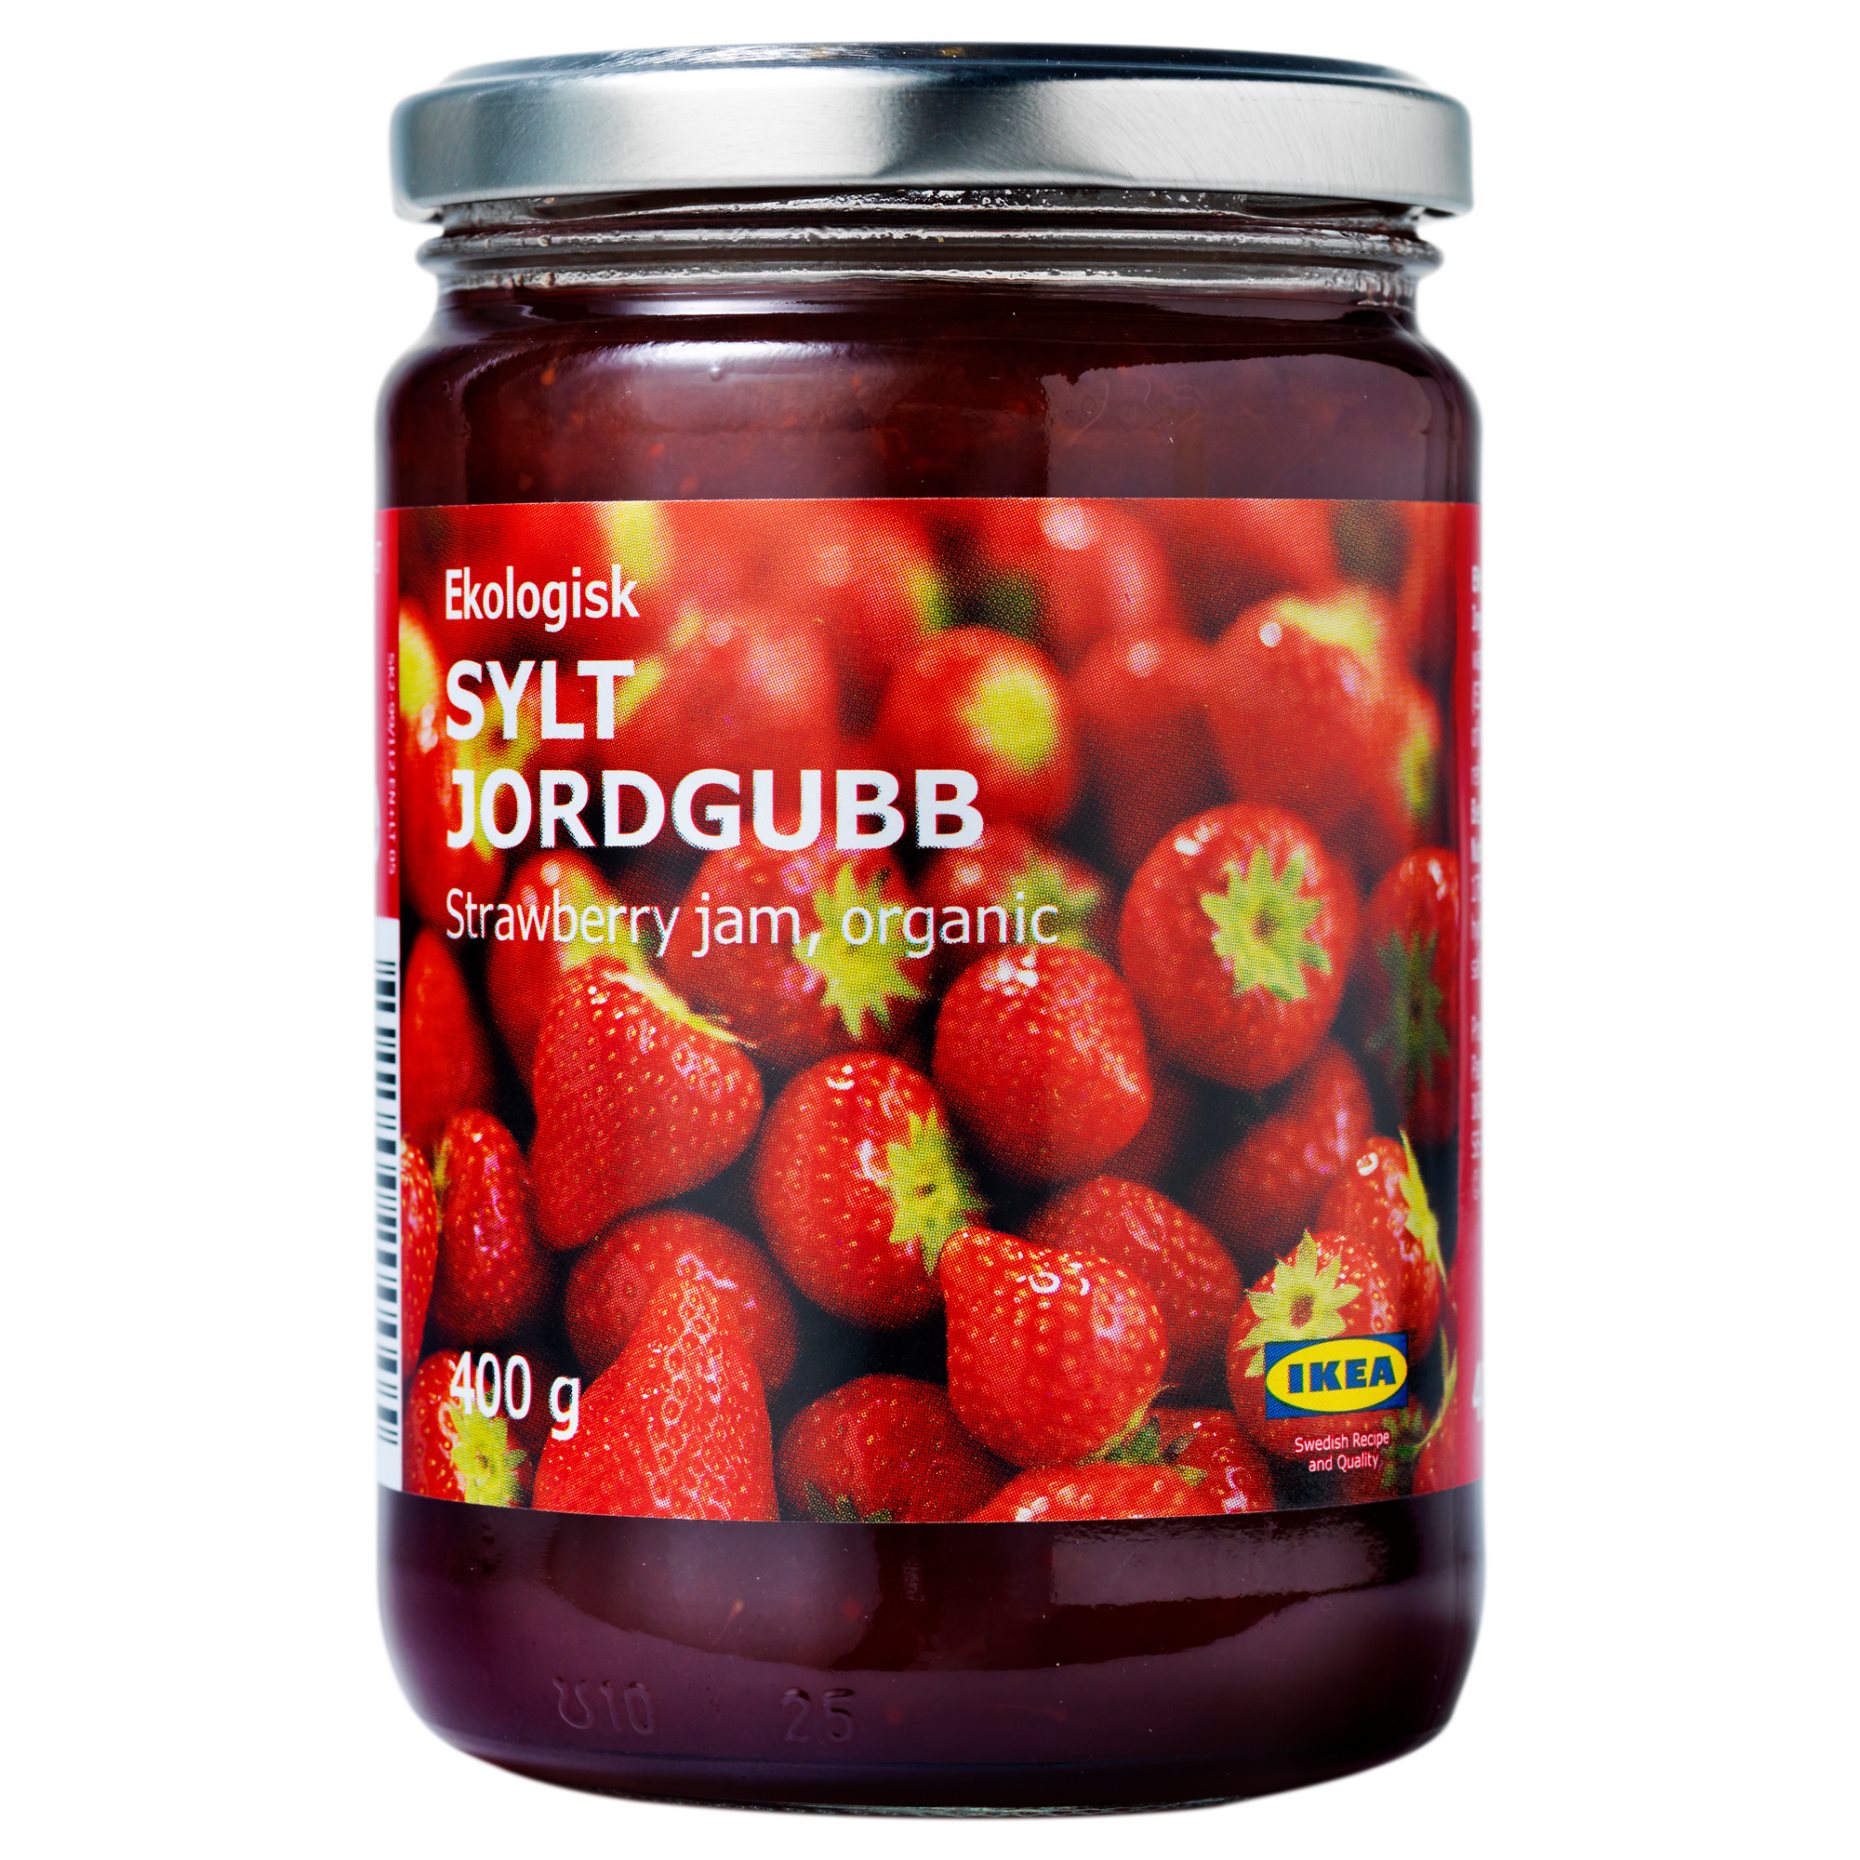 SYLT JORDGUBB, προϊόν επάλειψης με φράουλα βιολογικής γεωργίας 400 g, 701.509.20